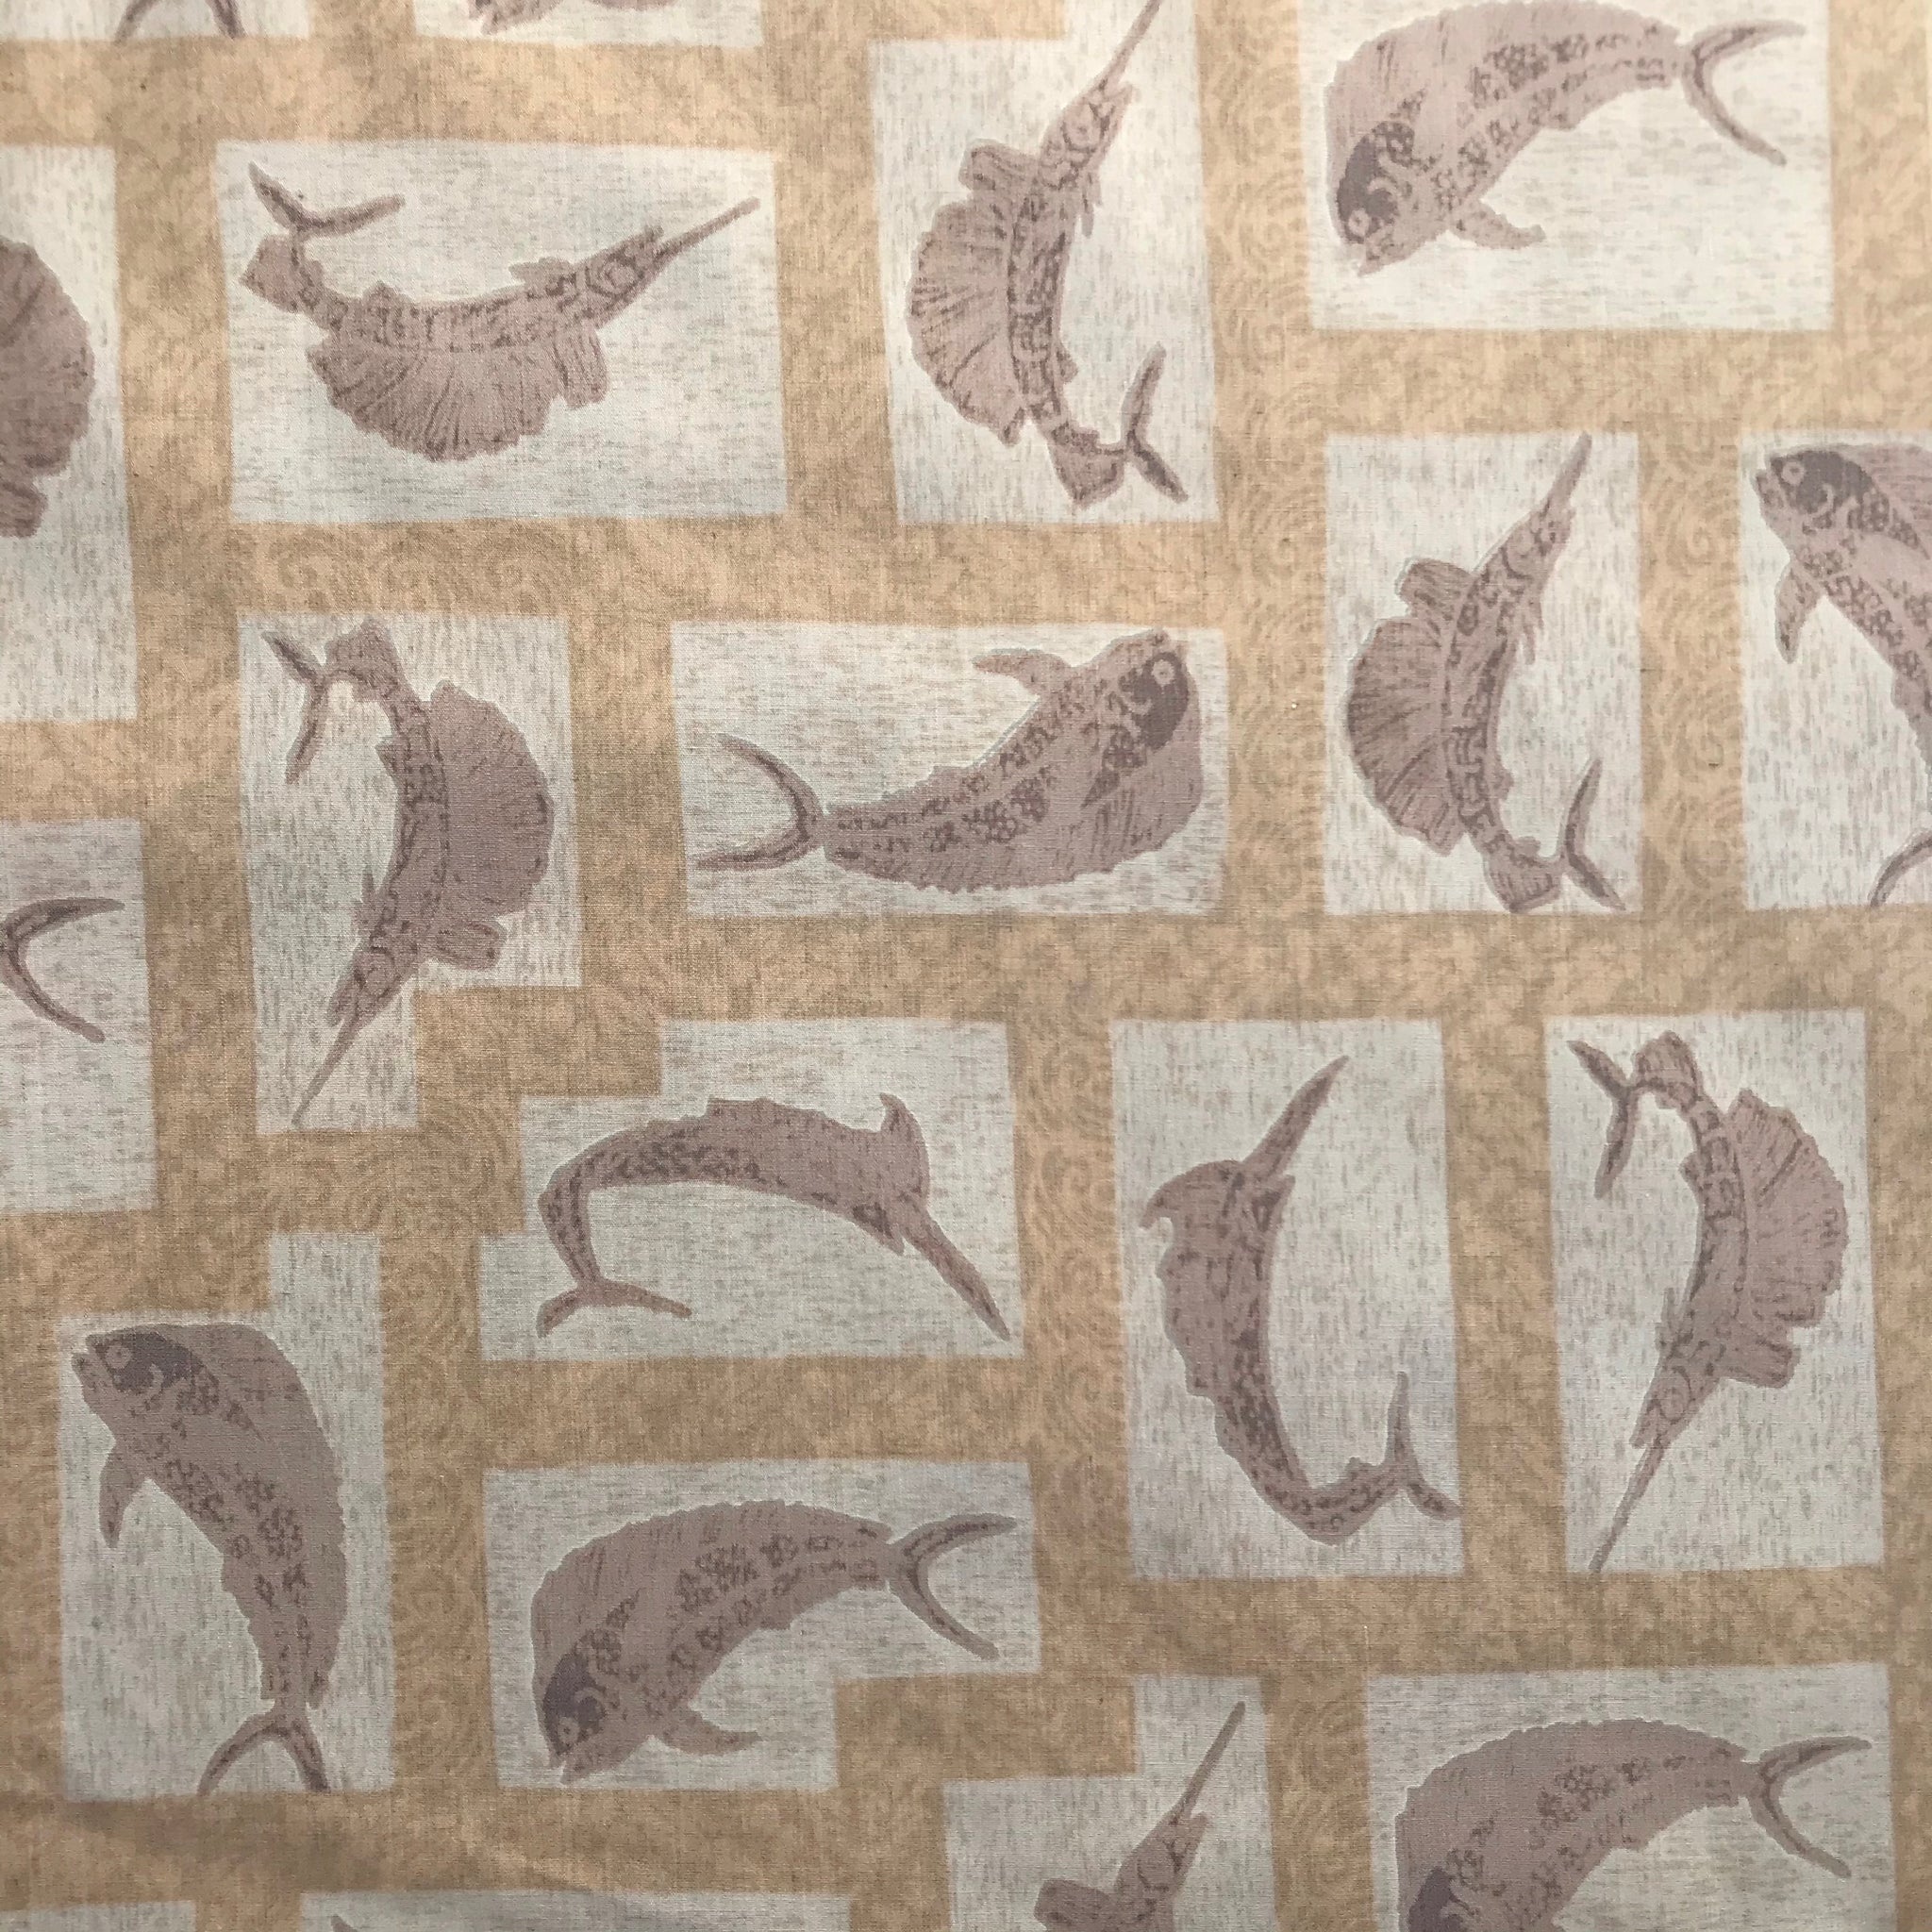 Fish prints quilting fabrics - 100% Cotton